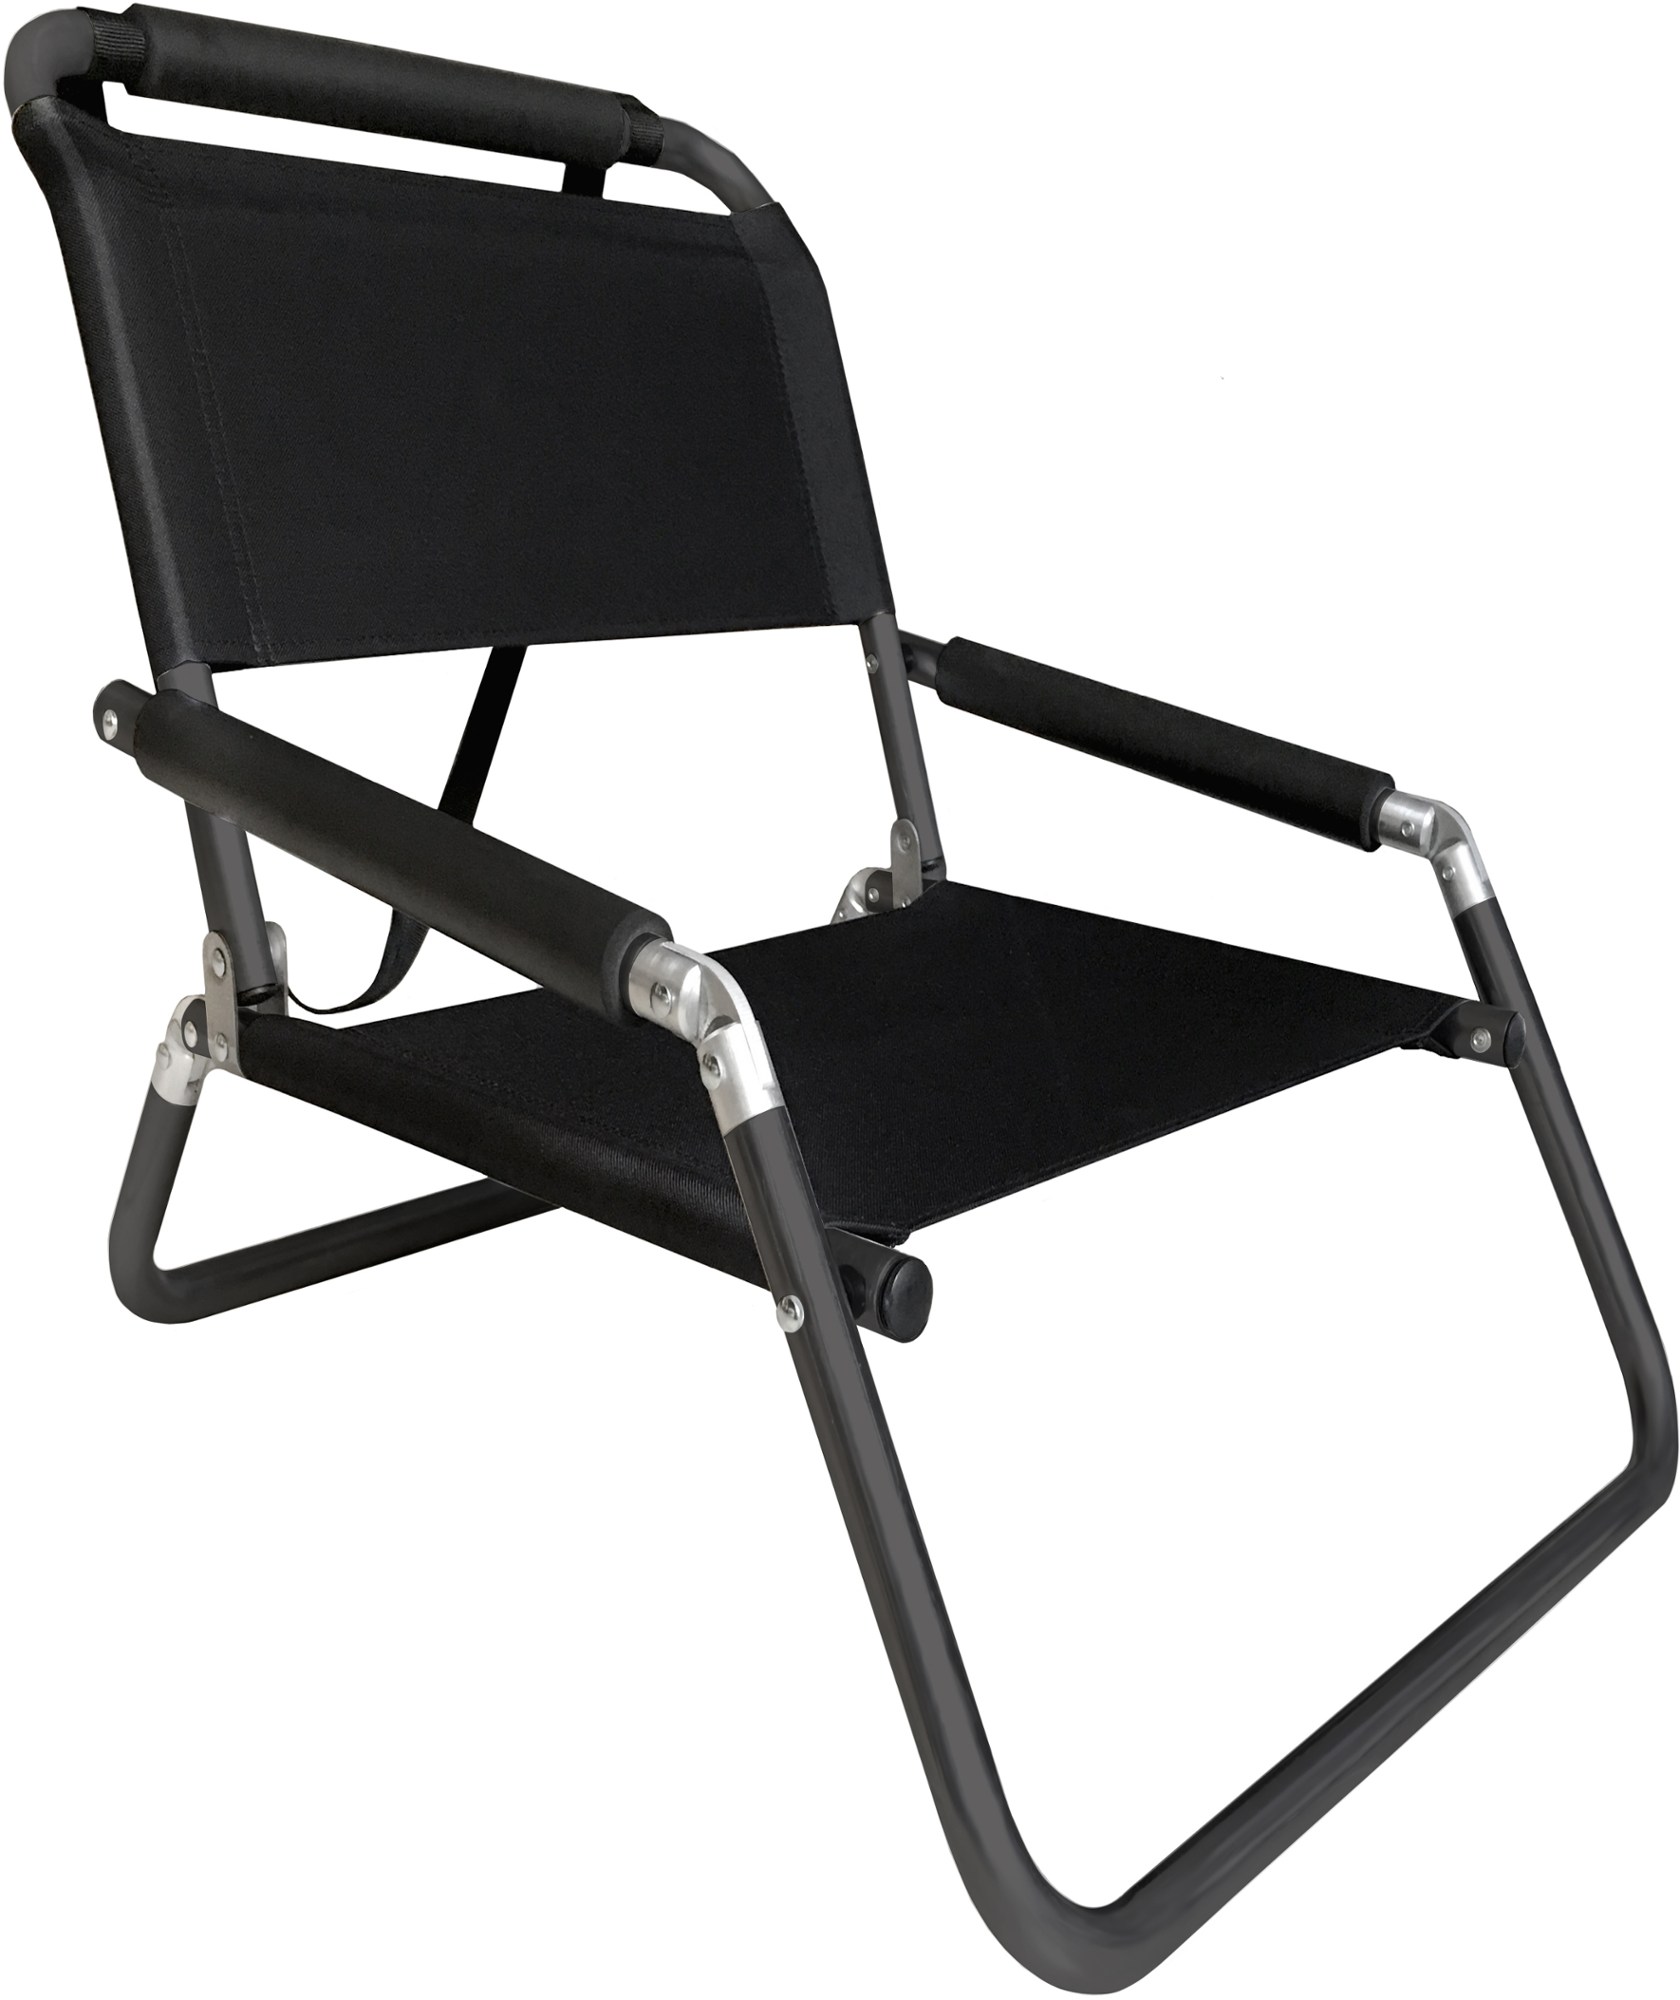 Пляжный стул XL Neso, черный promotion outdoor folding portable beach chairs sun chair sea chair beach